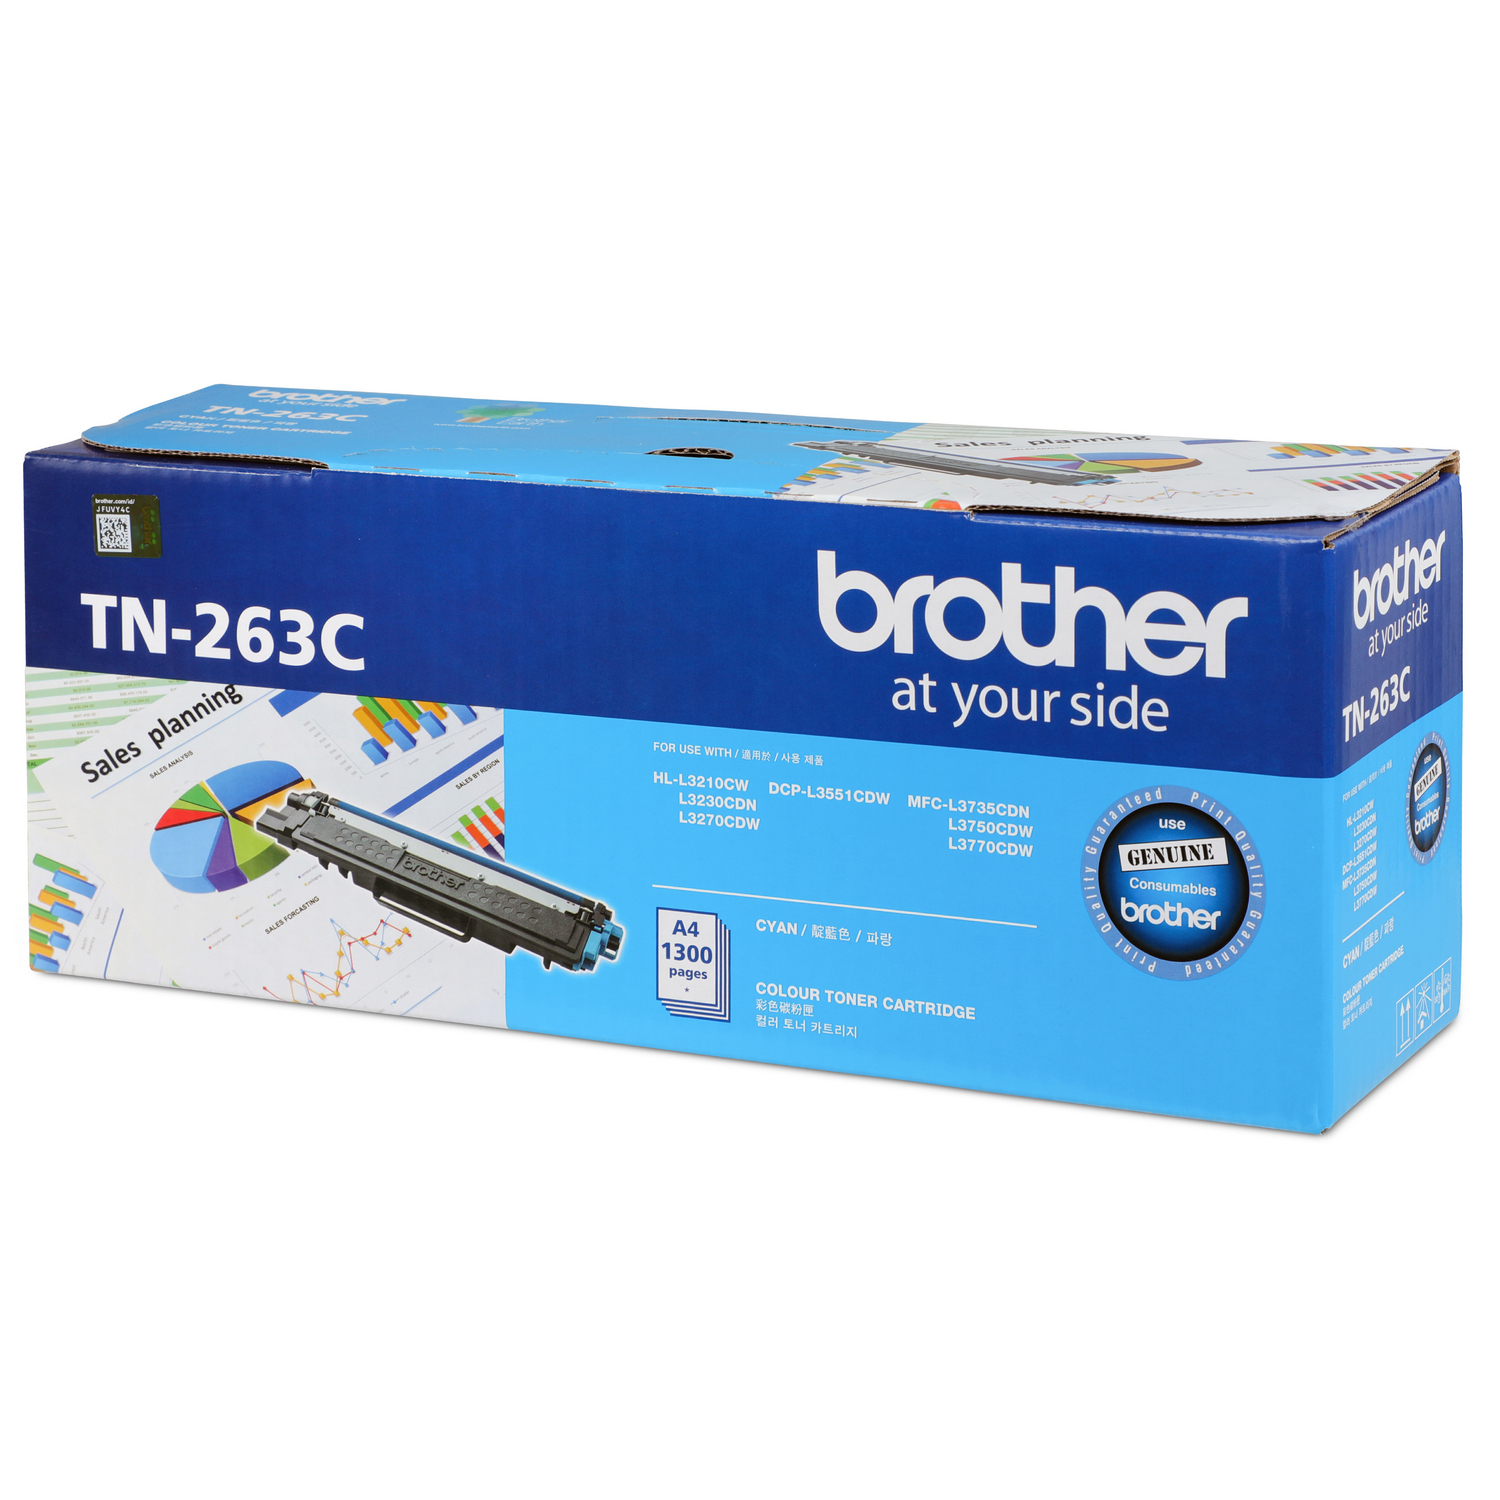 Brother Toner - TN-263C